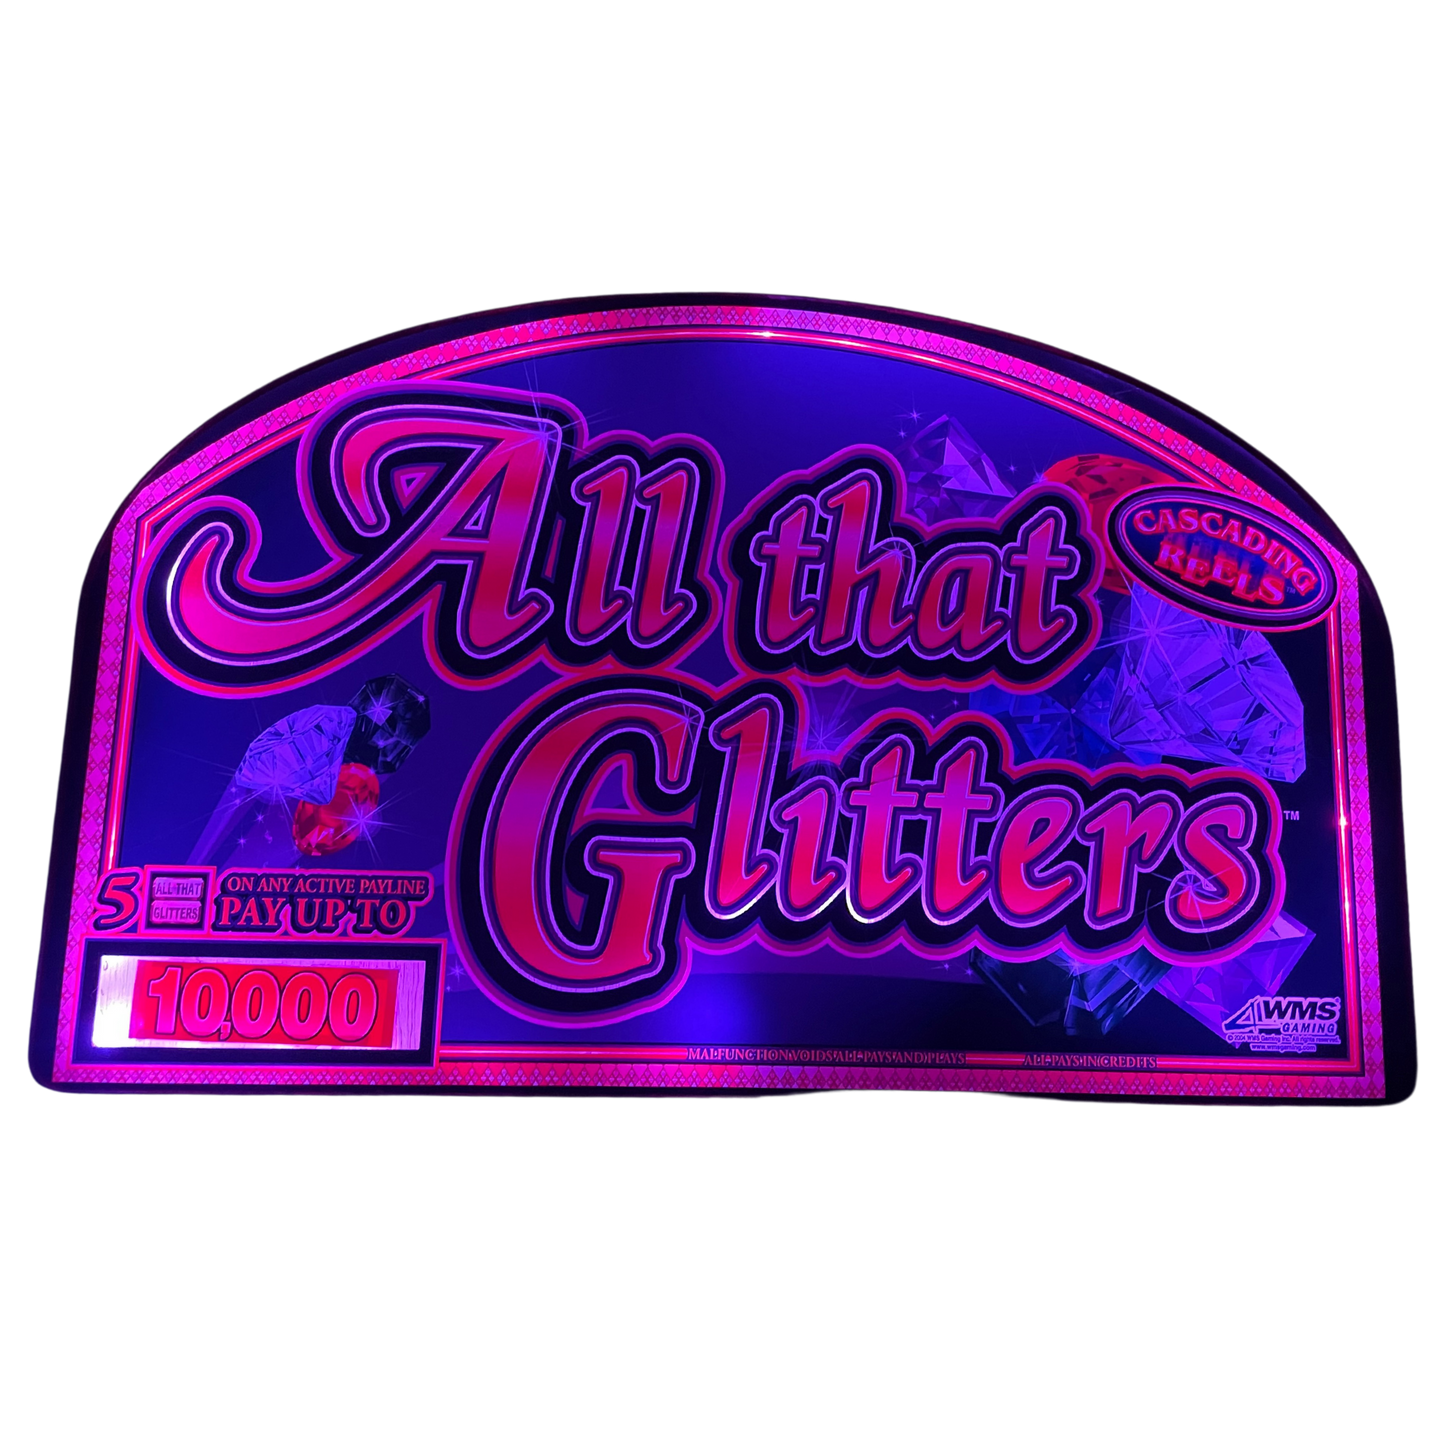 All That Glitters Slot Glass